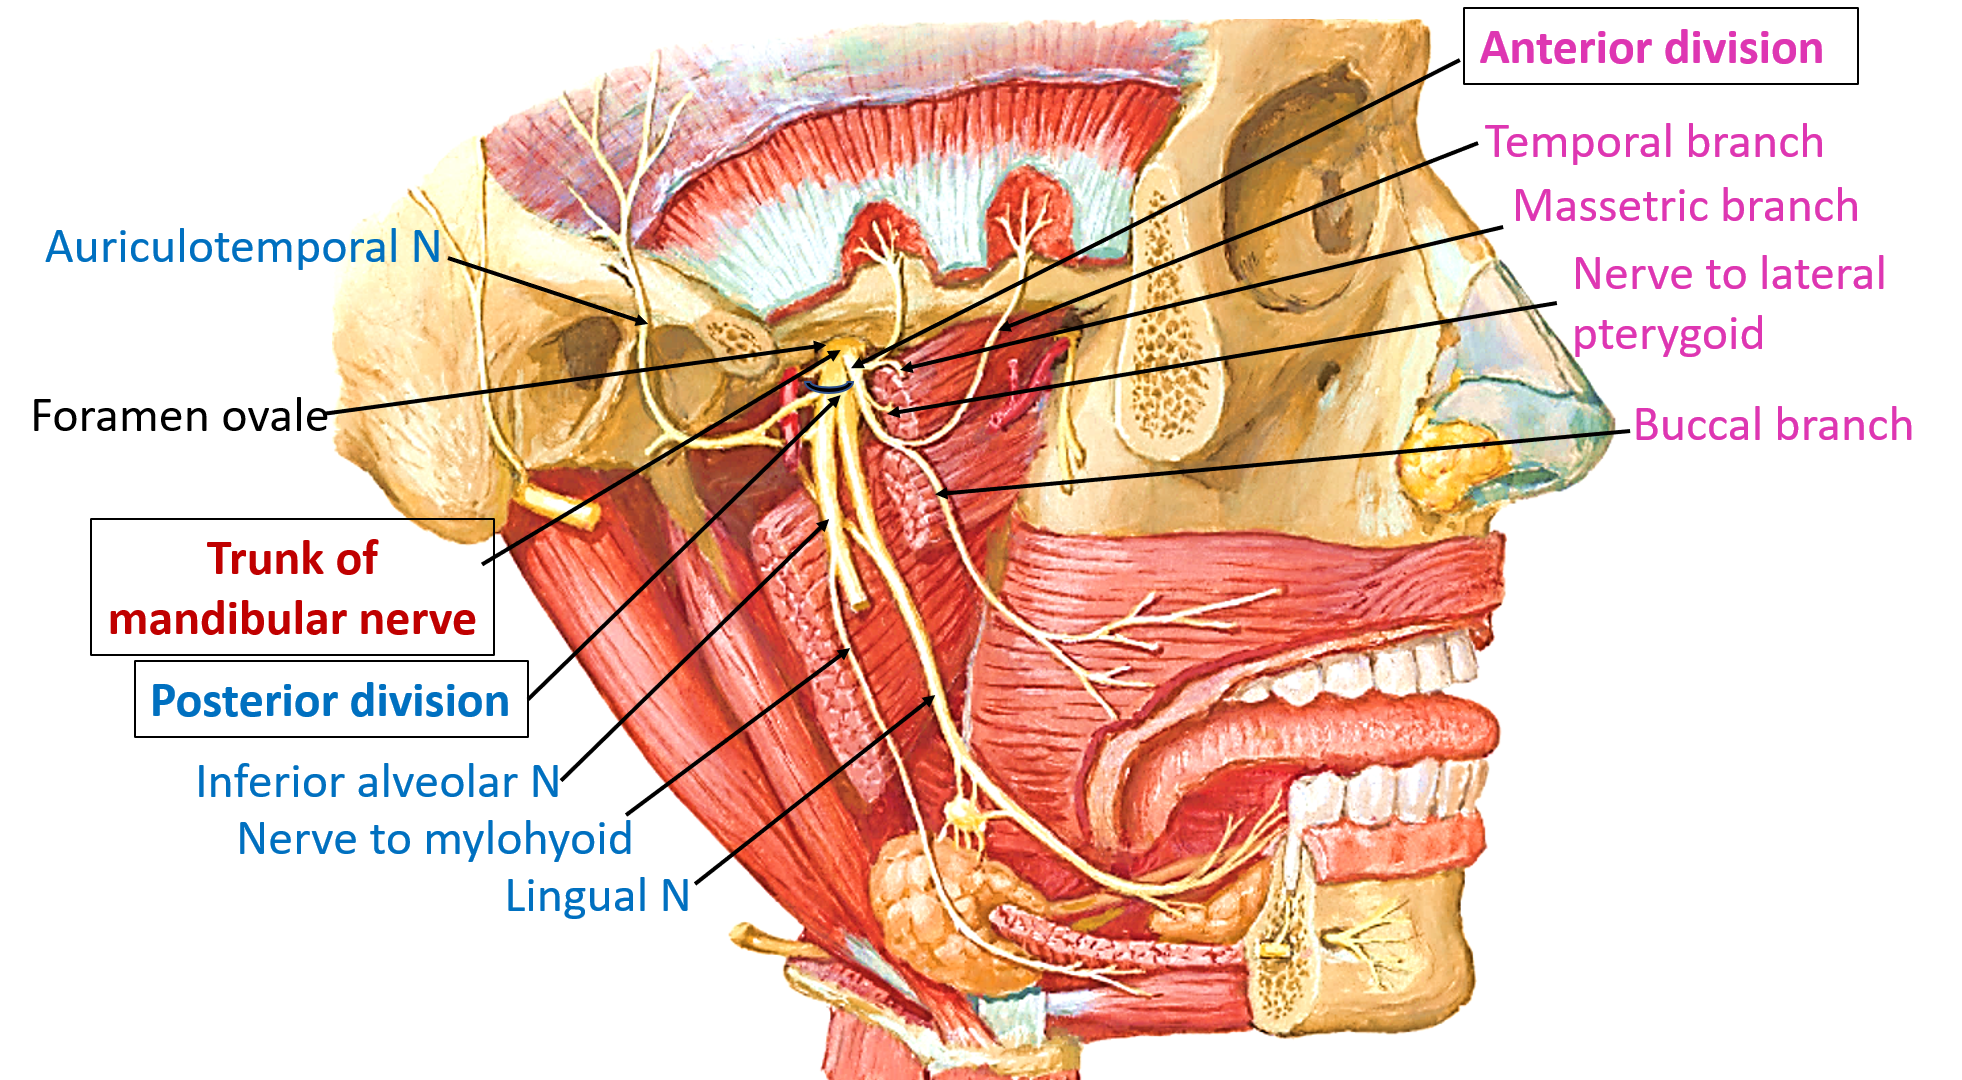 Mandibular nerve Quiz